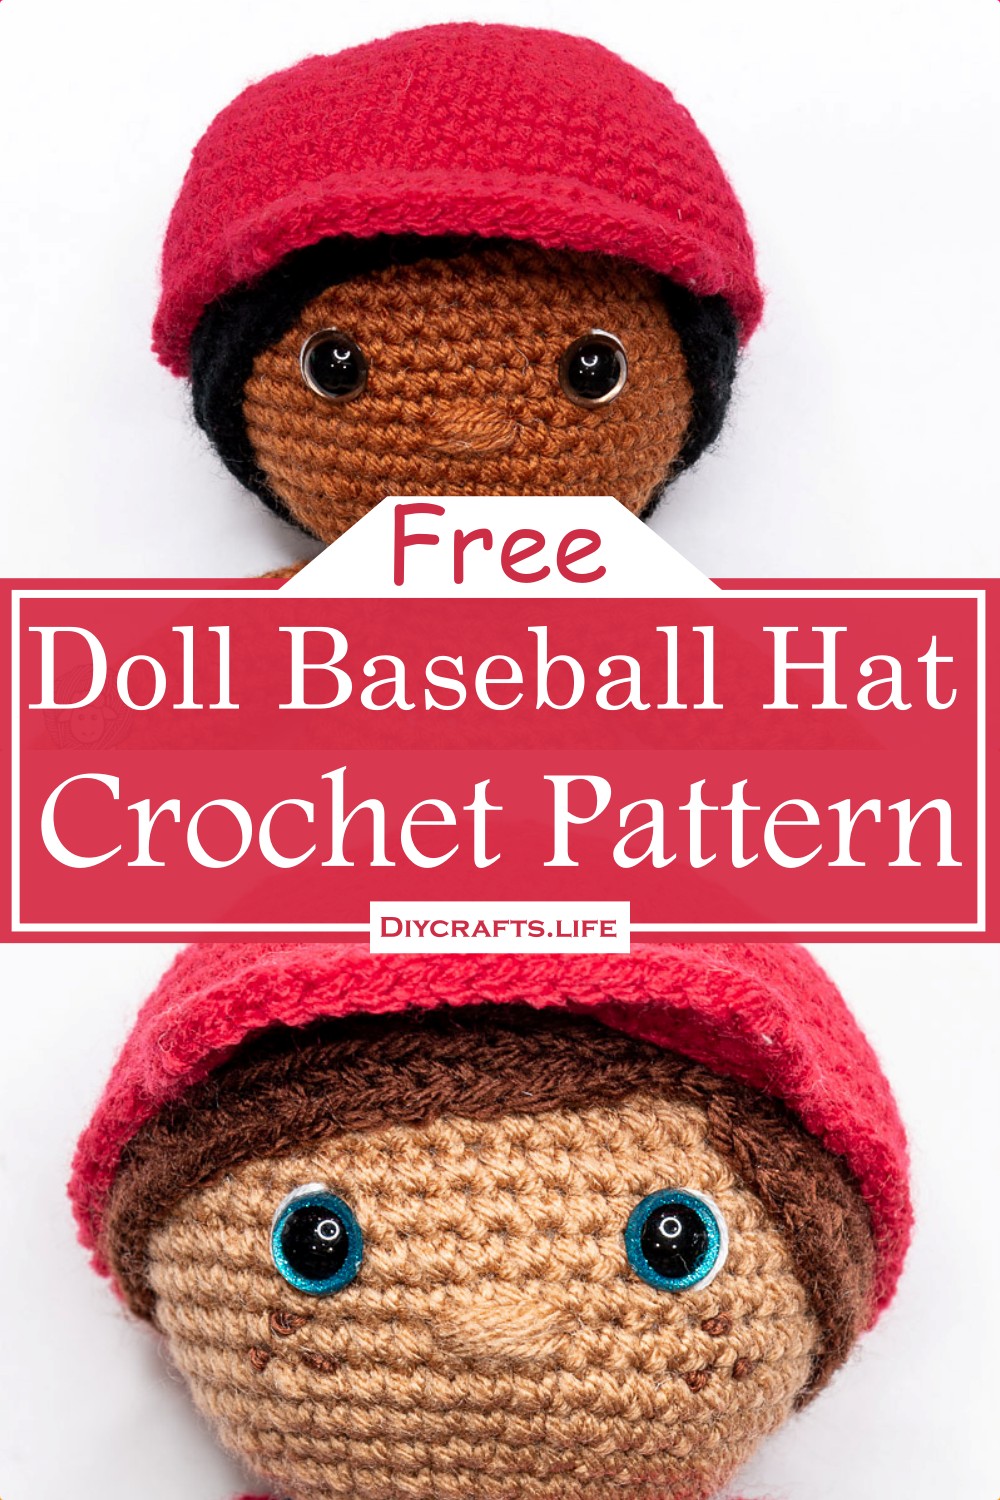 Crochet Doll Baseball Hat